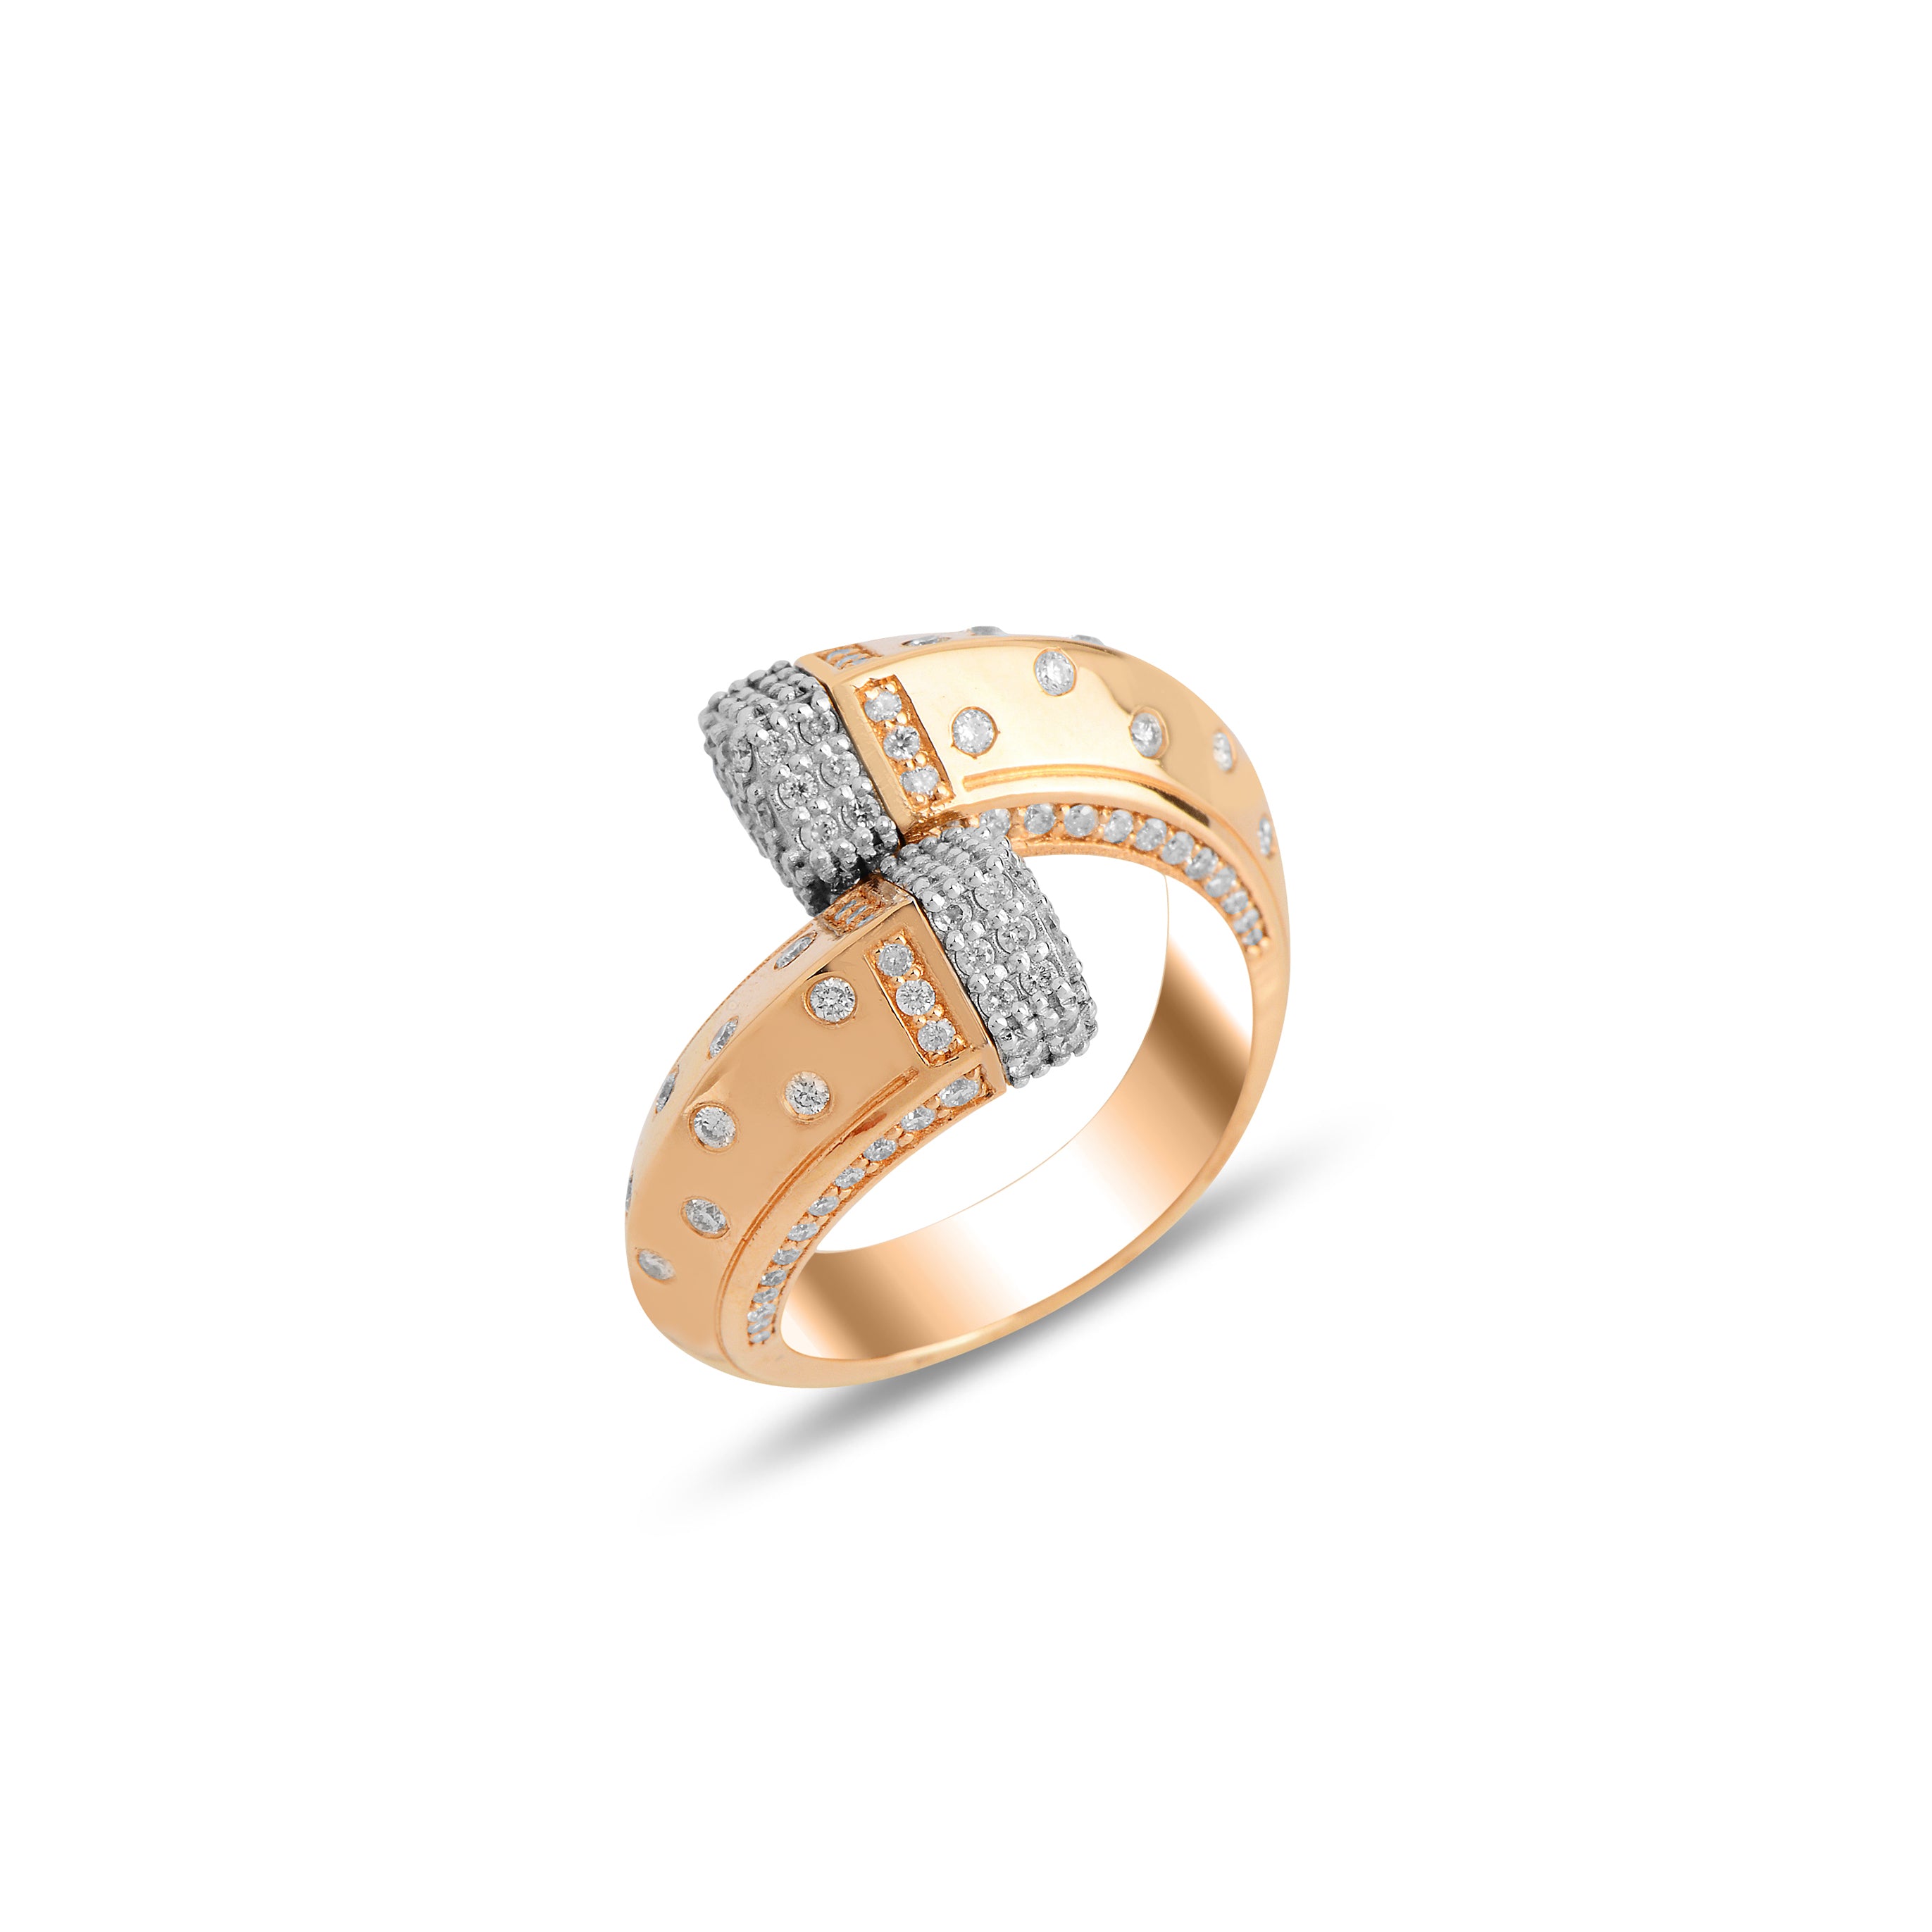 Neutra Balance Colorless Ring - All Diamond Edition